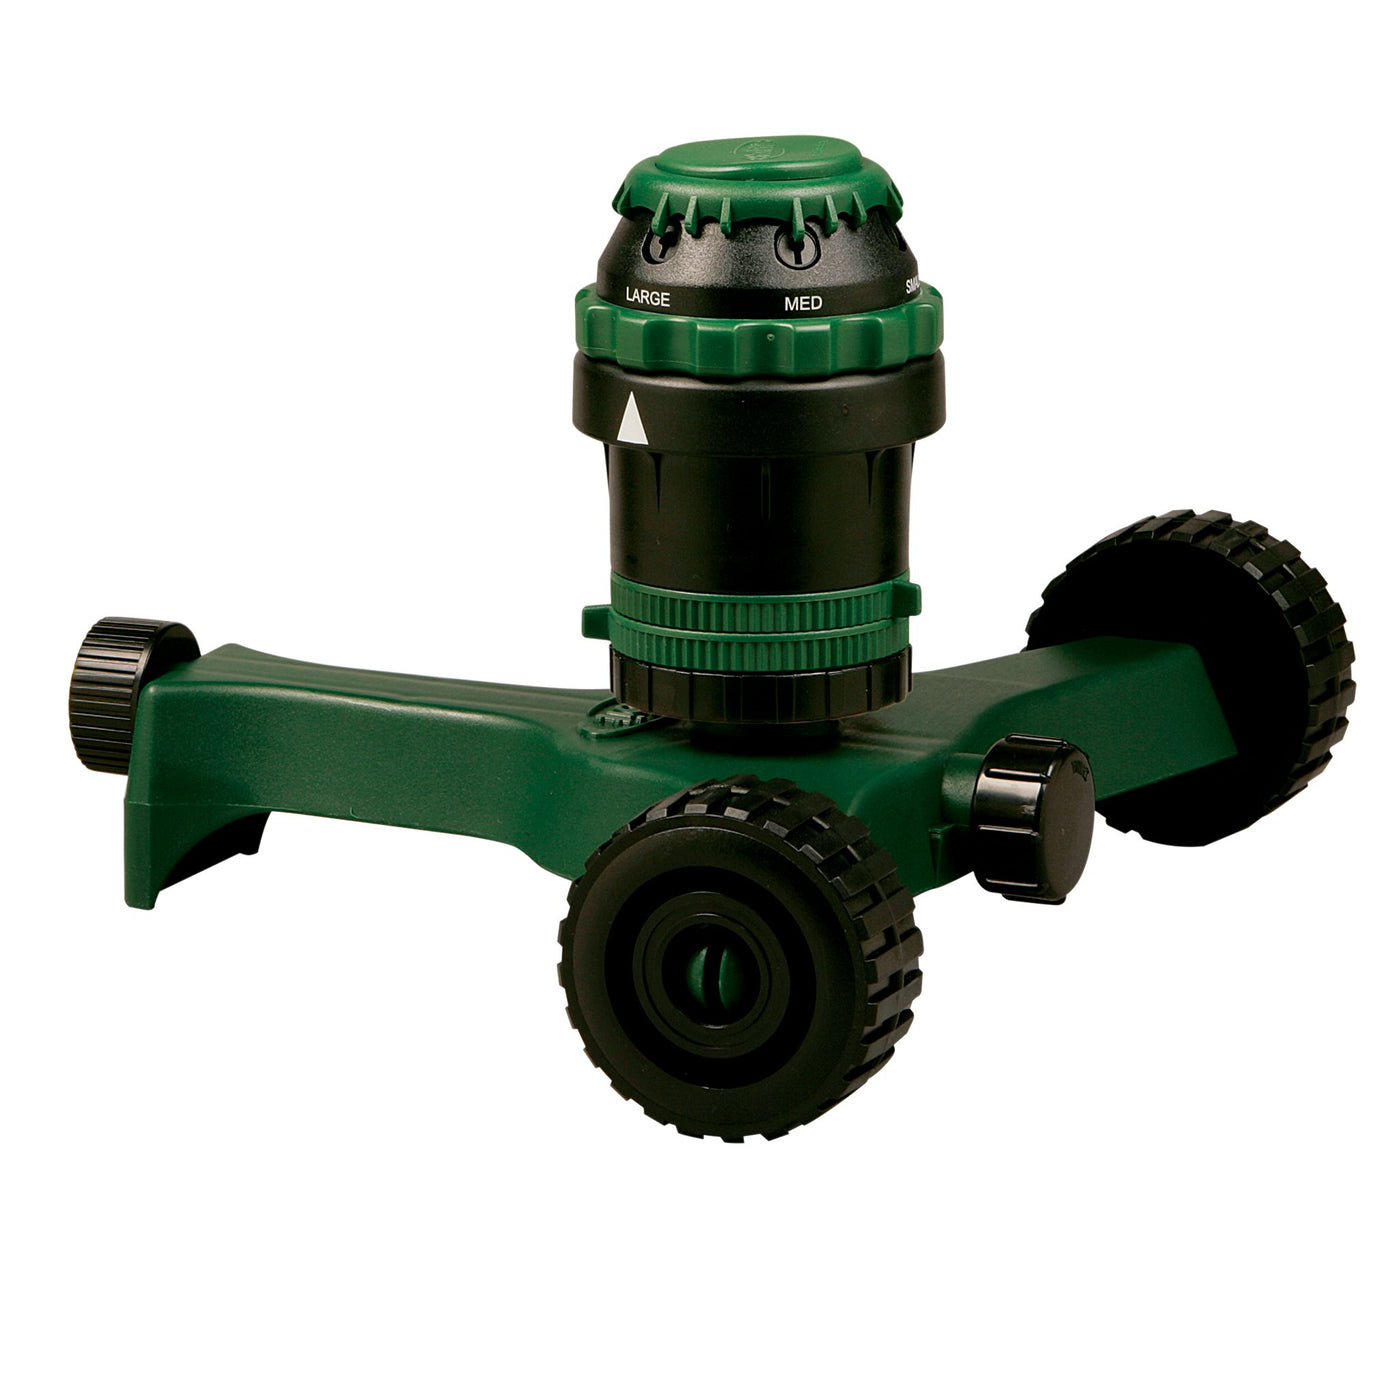 H2O-6 Gear-Drive Sprinkler on Plastic Wheel Base